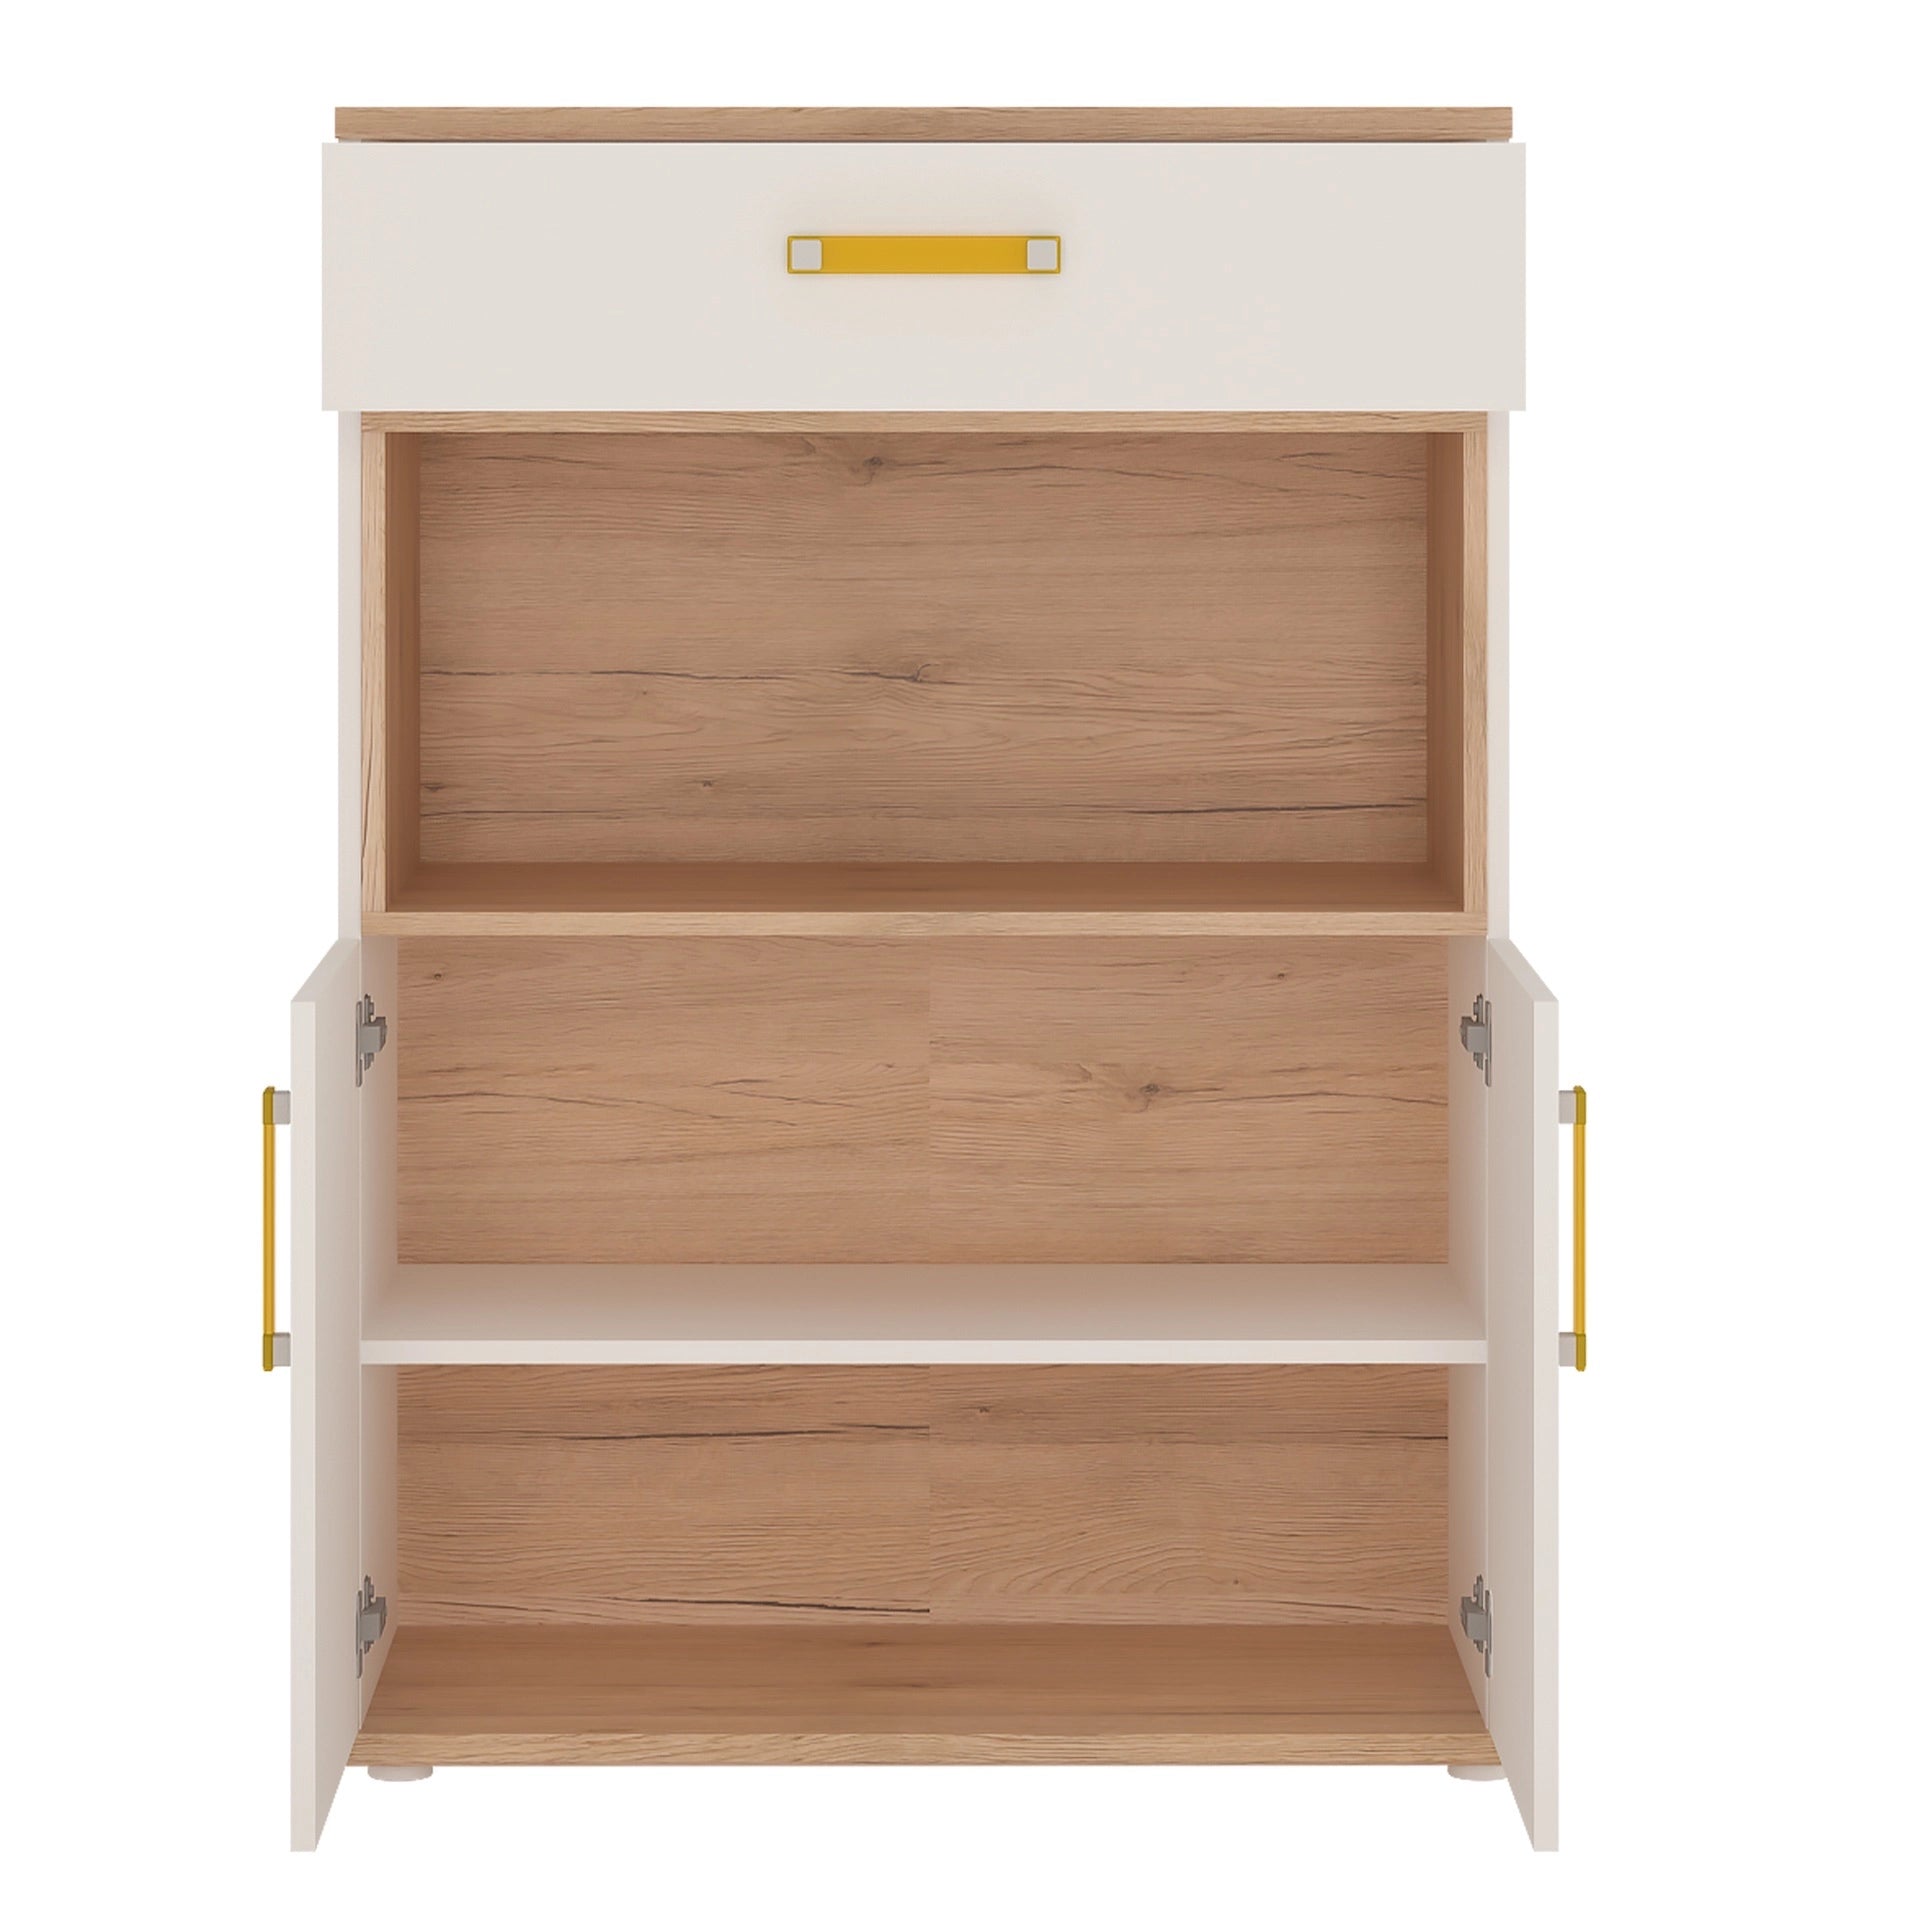 Furniture To Go 4Kids 2 Door 1 Drawer Cupboard with Open Shelf in Light Oak & White High Gloss (Orange Handles)